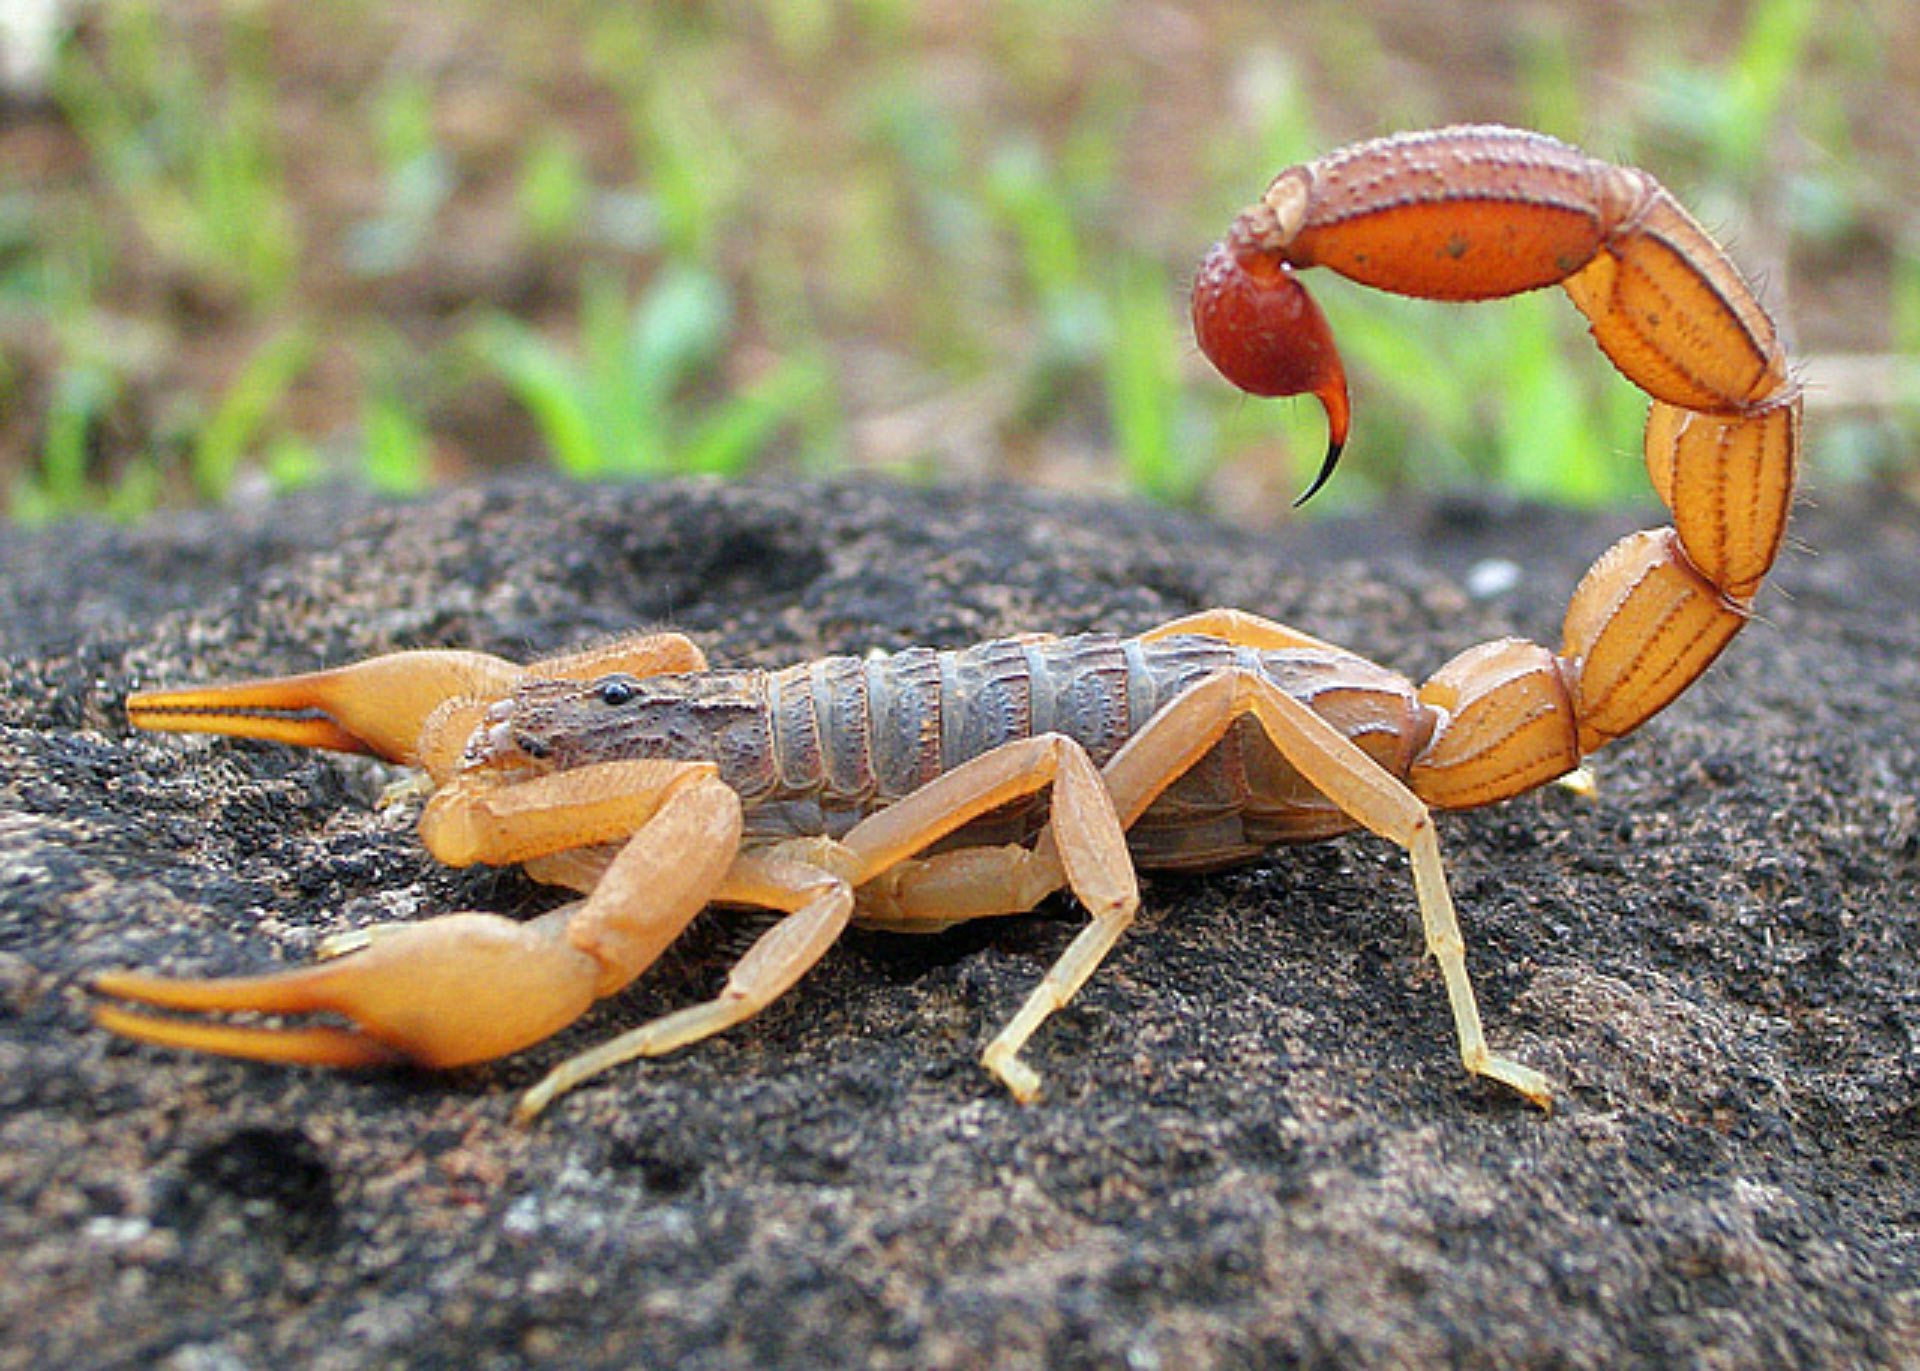 Scorpion Venom Toxin Reduces Severity of Rheumatoid Arthritis in ...